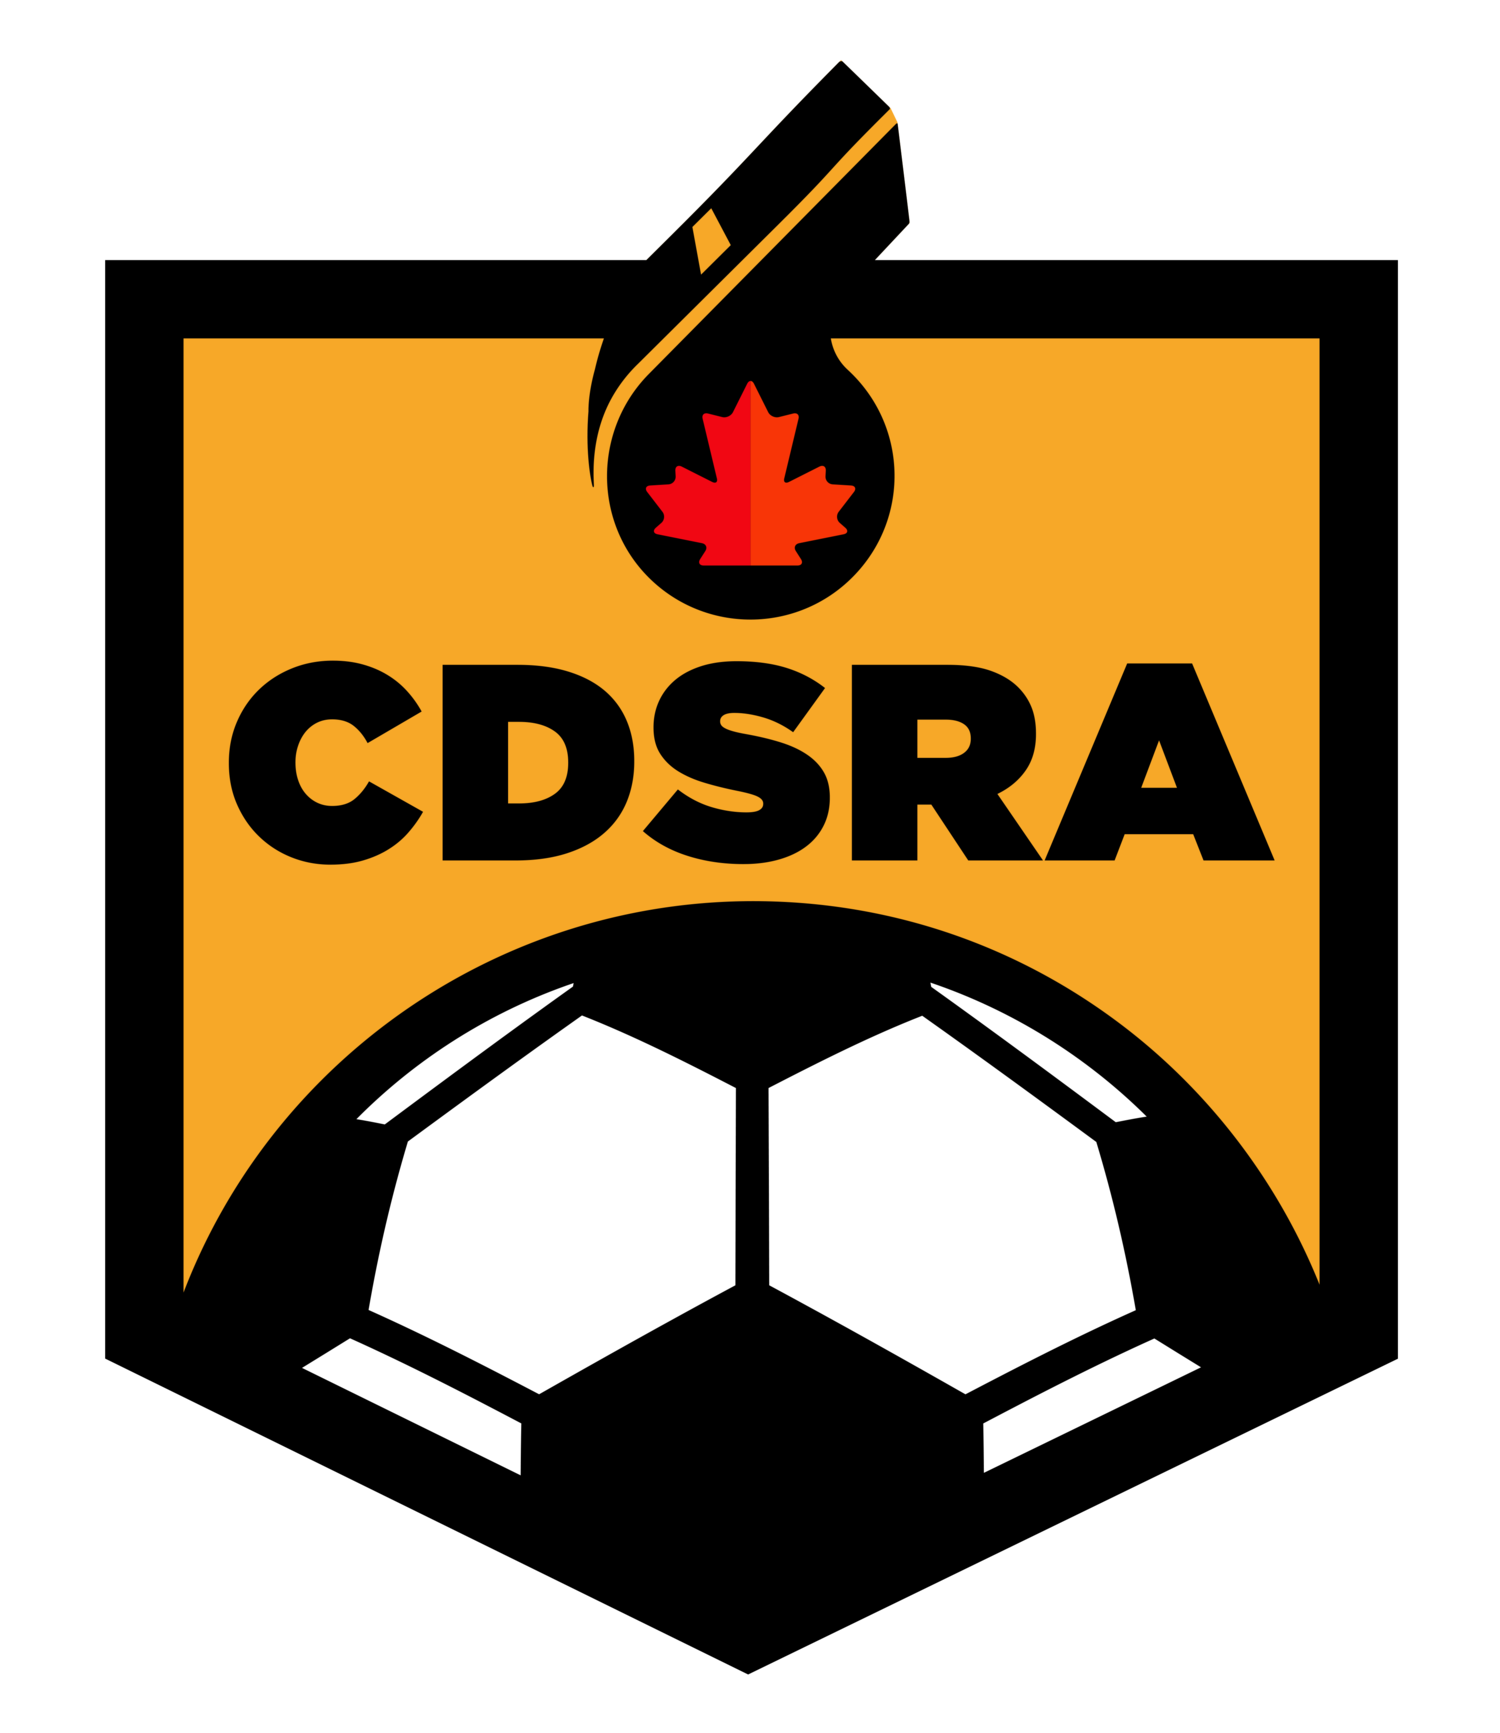 CDSRA - Calgary District Soccer Referees Association